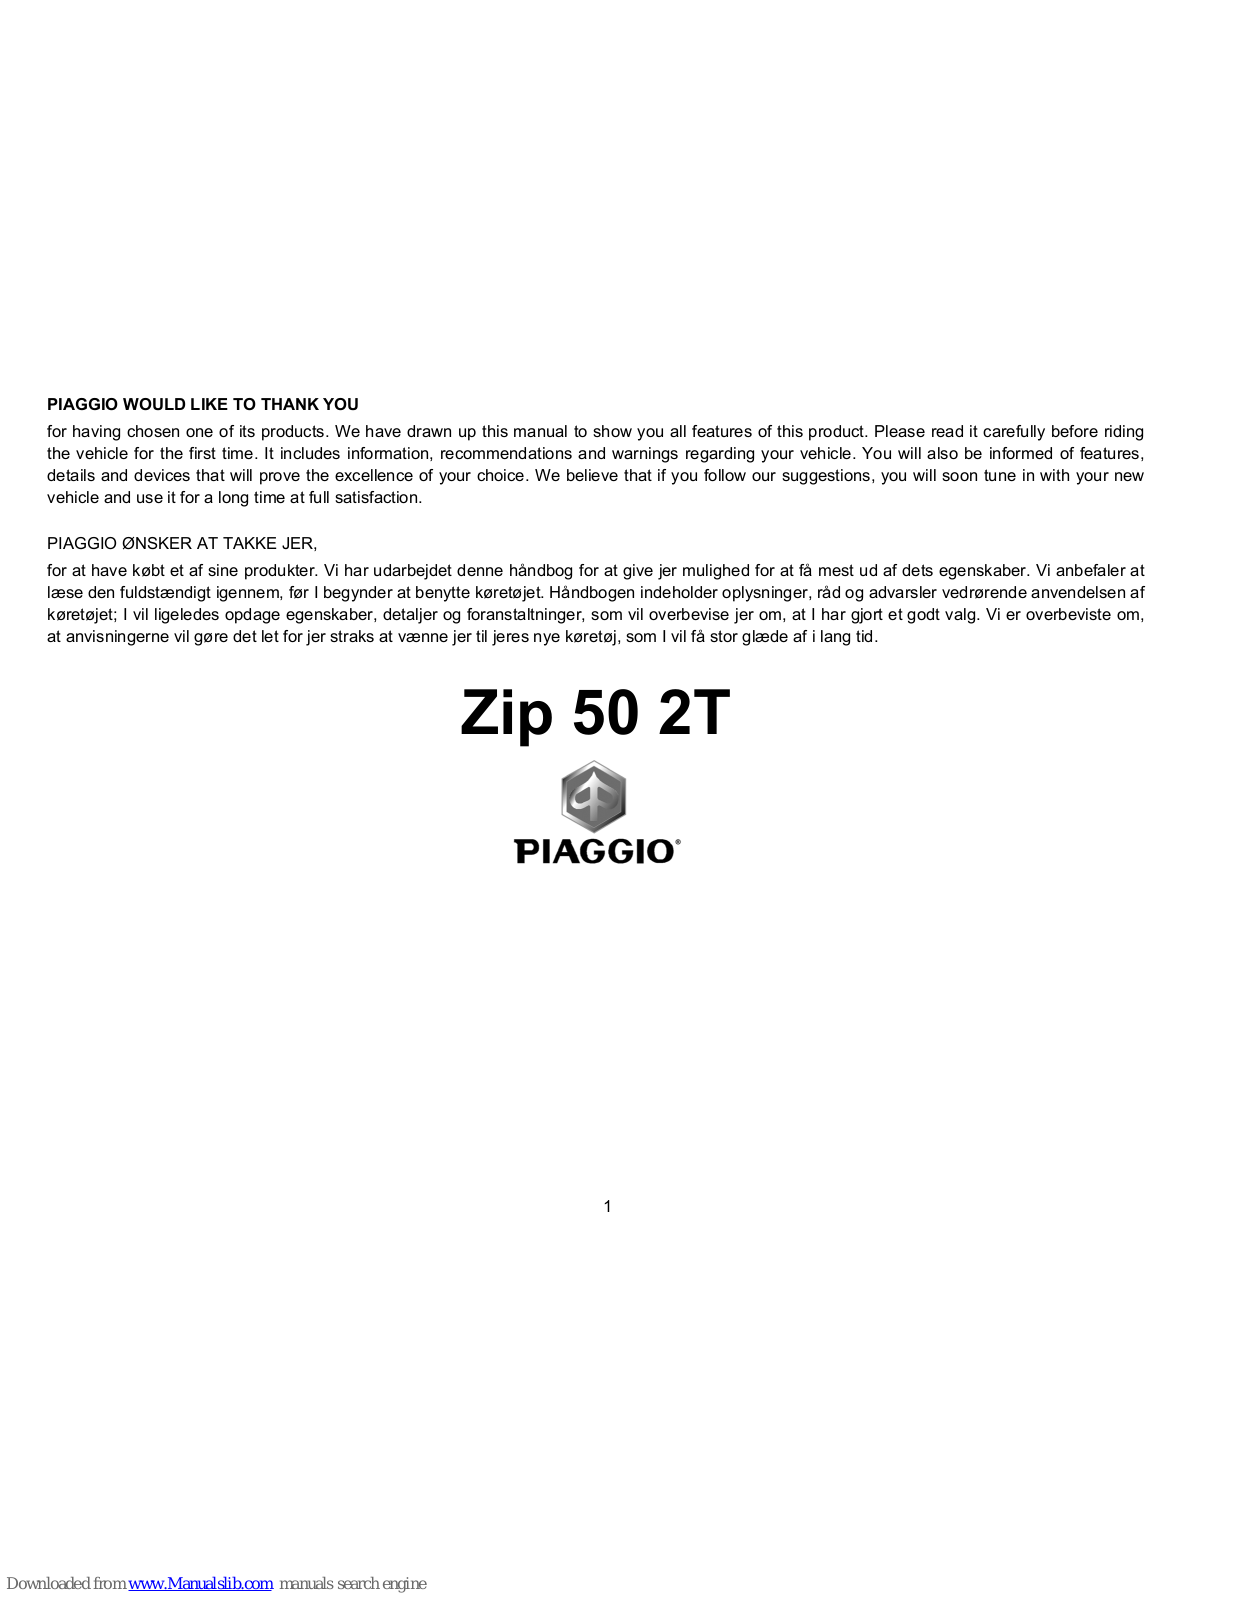 PIAGGIO ZIP 50 2T User Manual